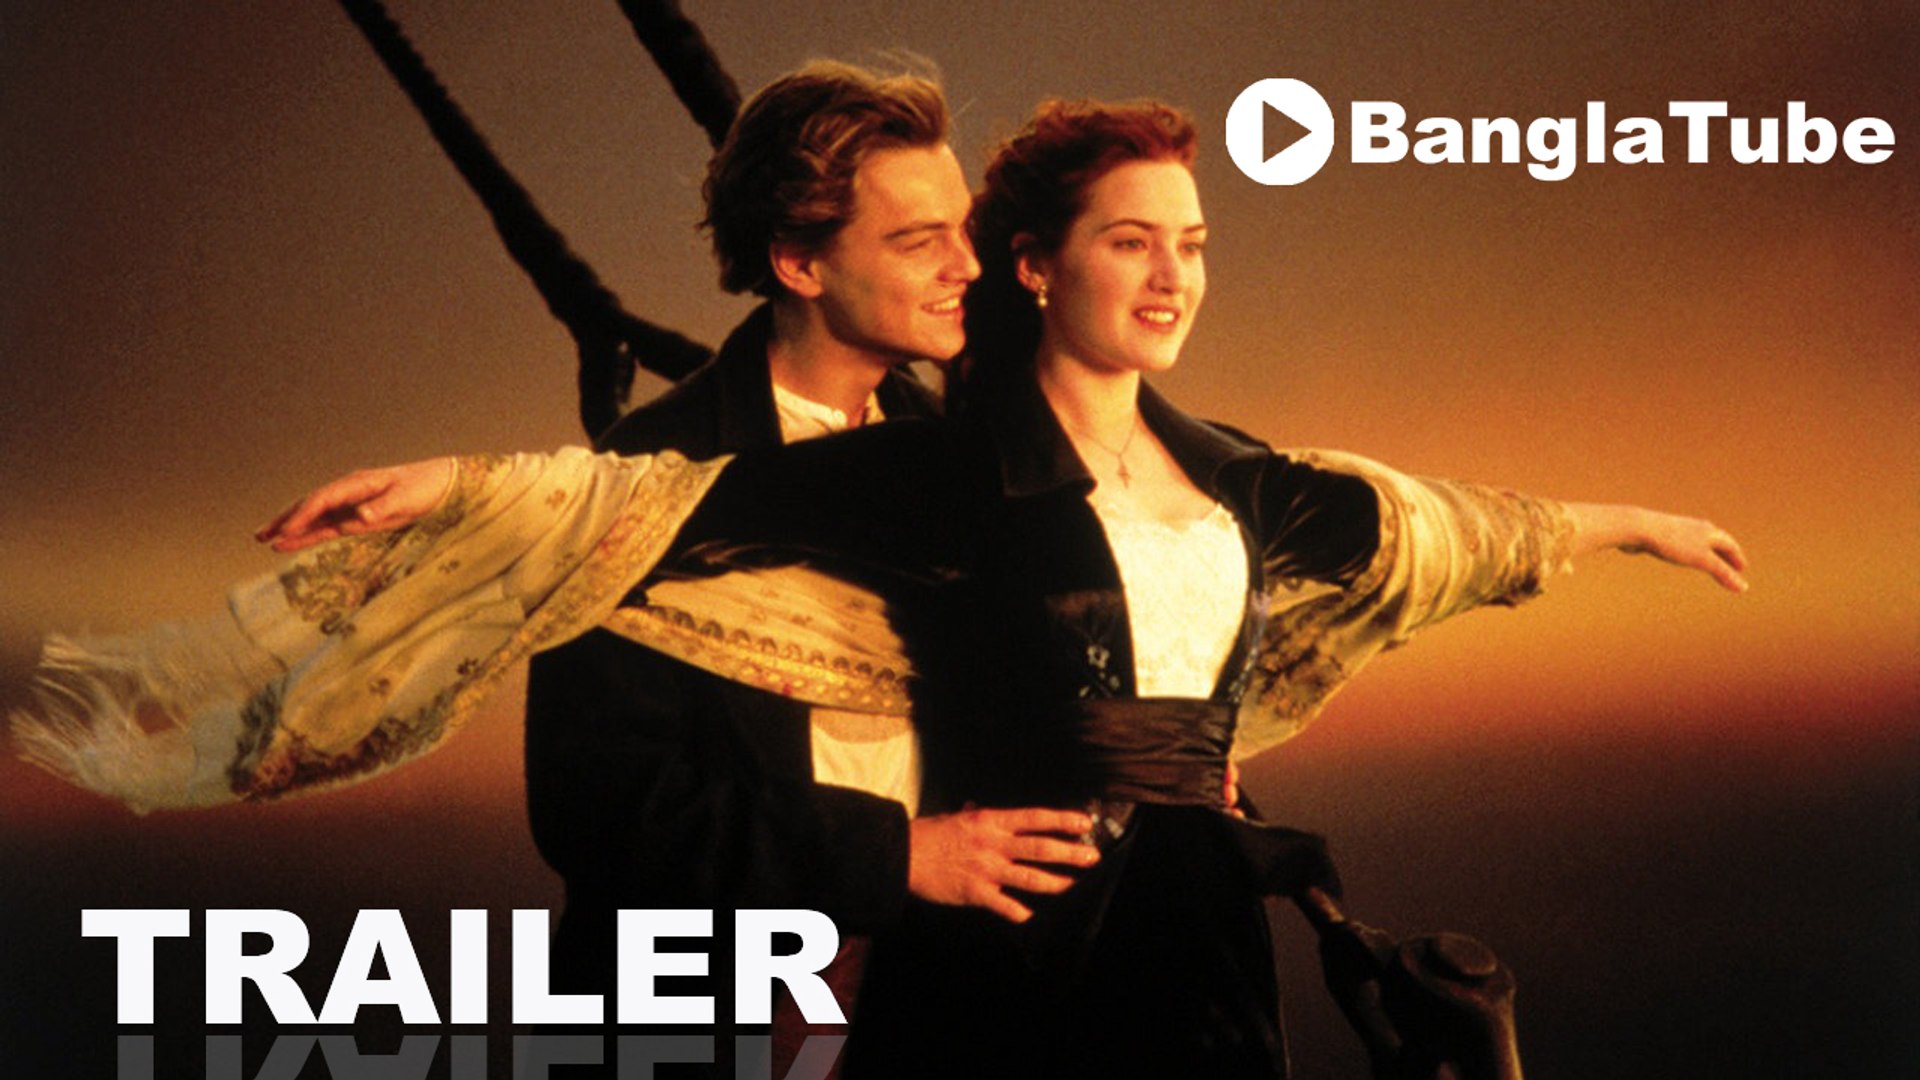 Titanic Movie Trailer - Bangla Tube - video Dailymotion